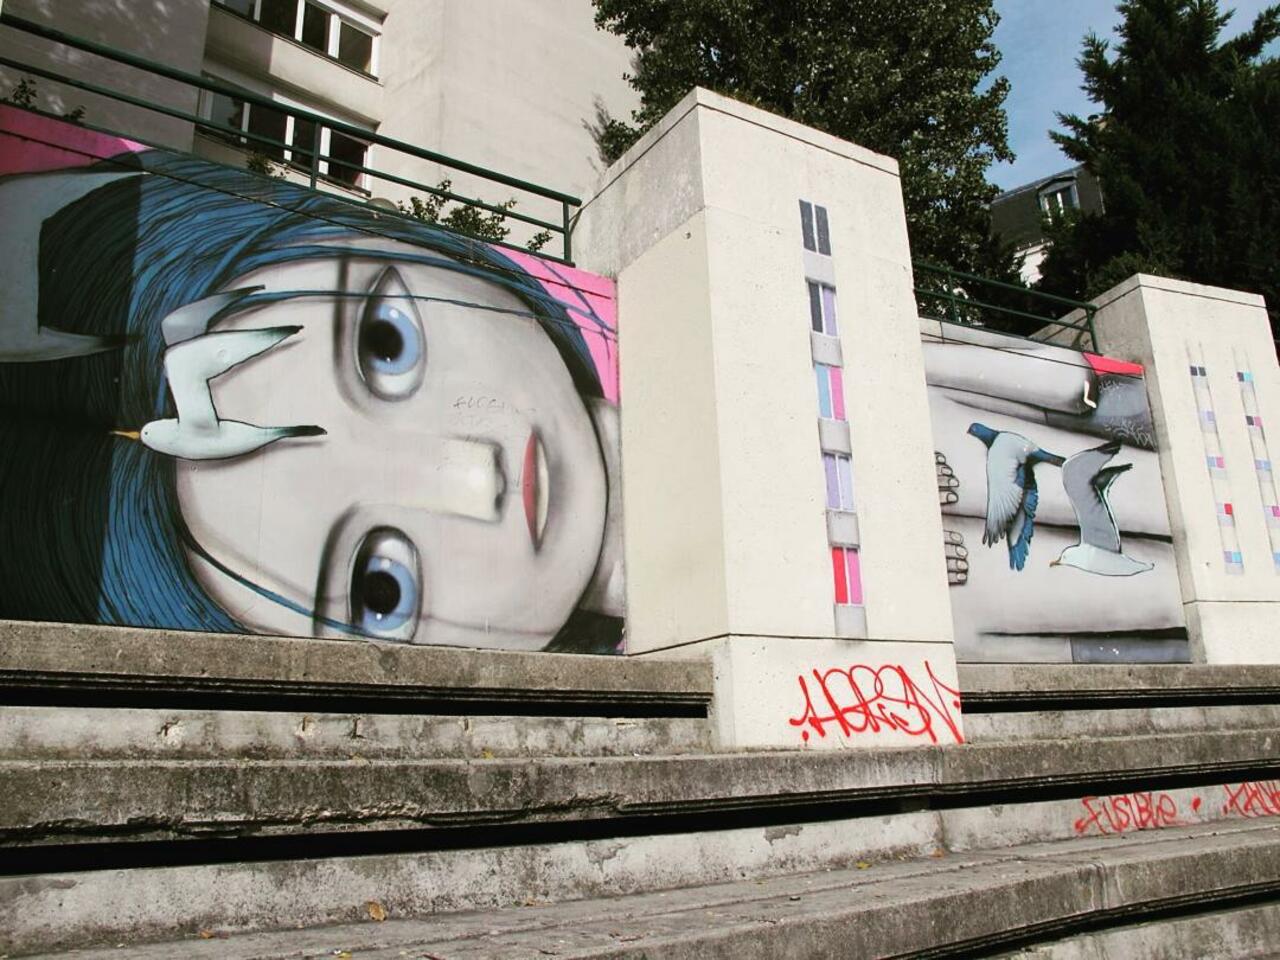 RT @circumjacent_fr: #Paris #graffiti photo by @streetrorart http://ift.tt/1NvTnNY #StreetArt https://t.co/QnOsASOABL